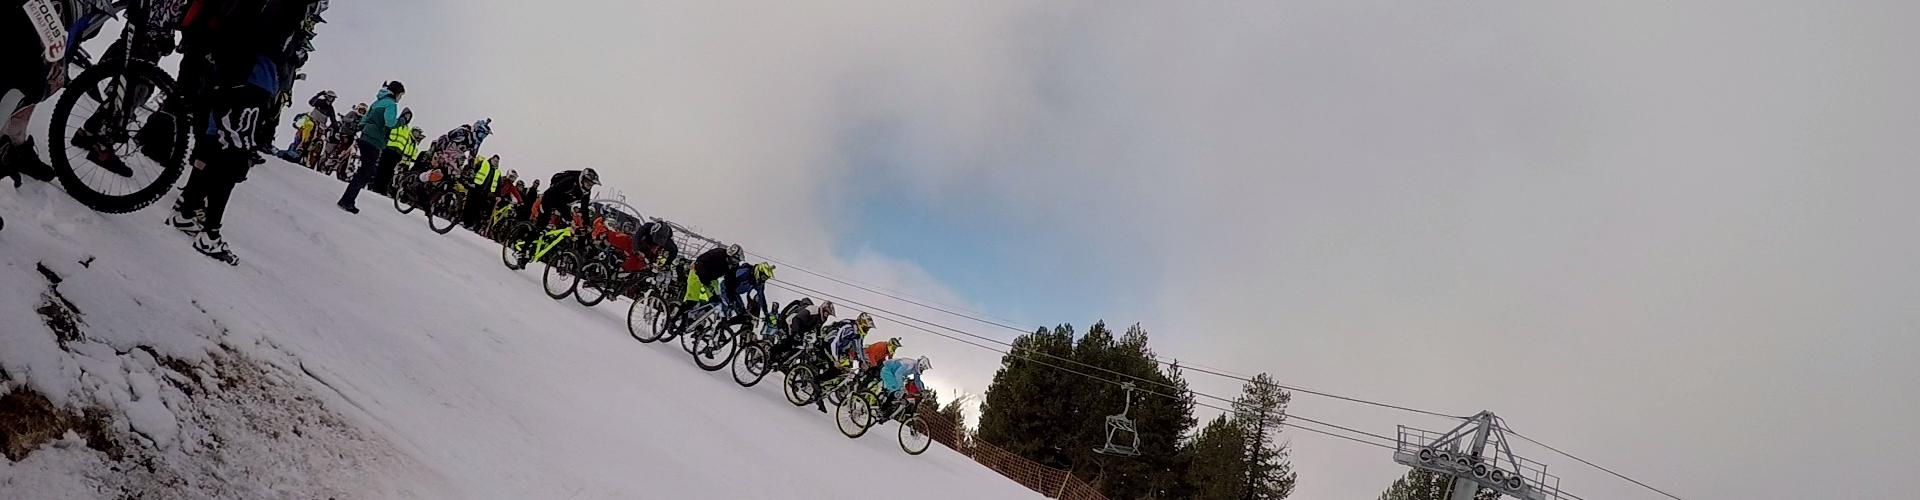 Snow Bike Contest